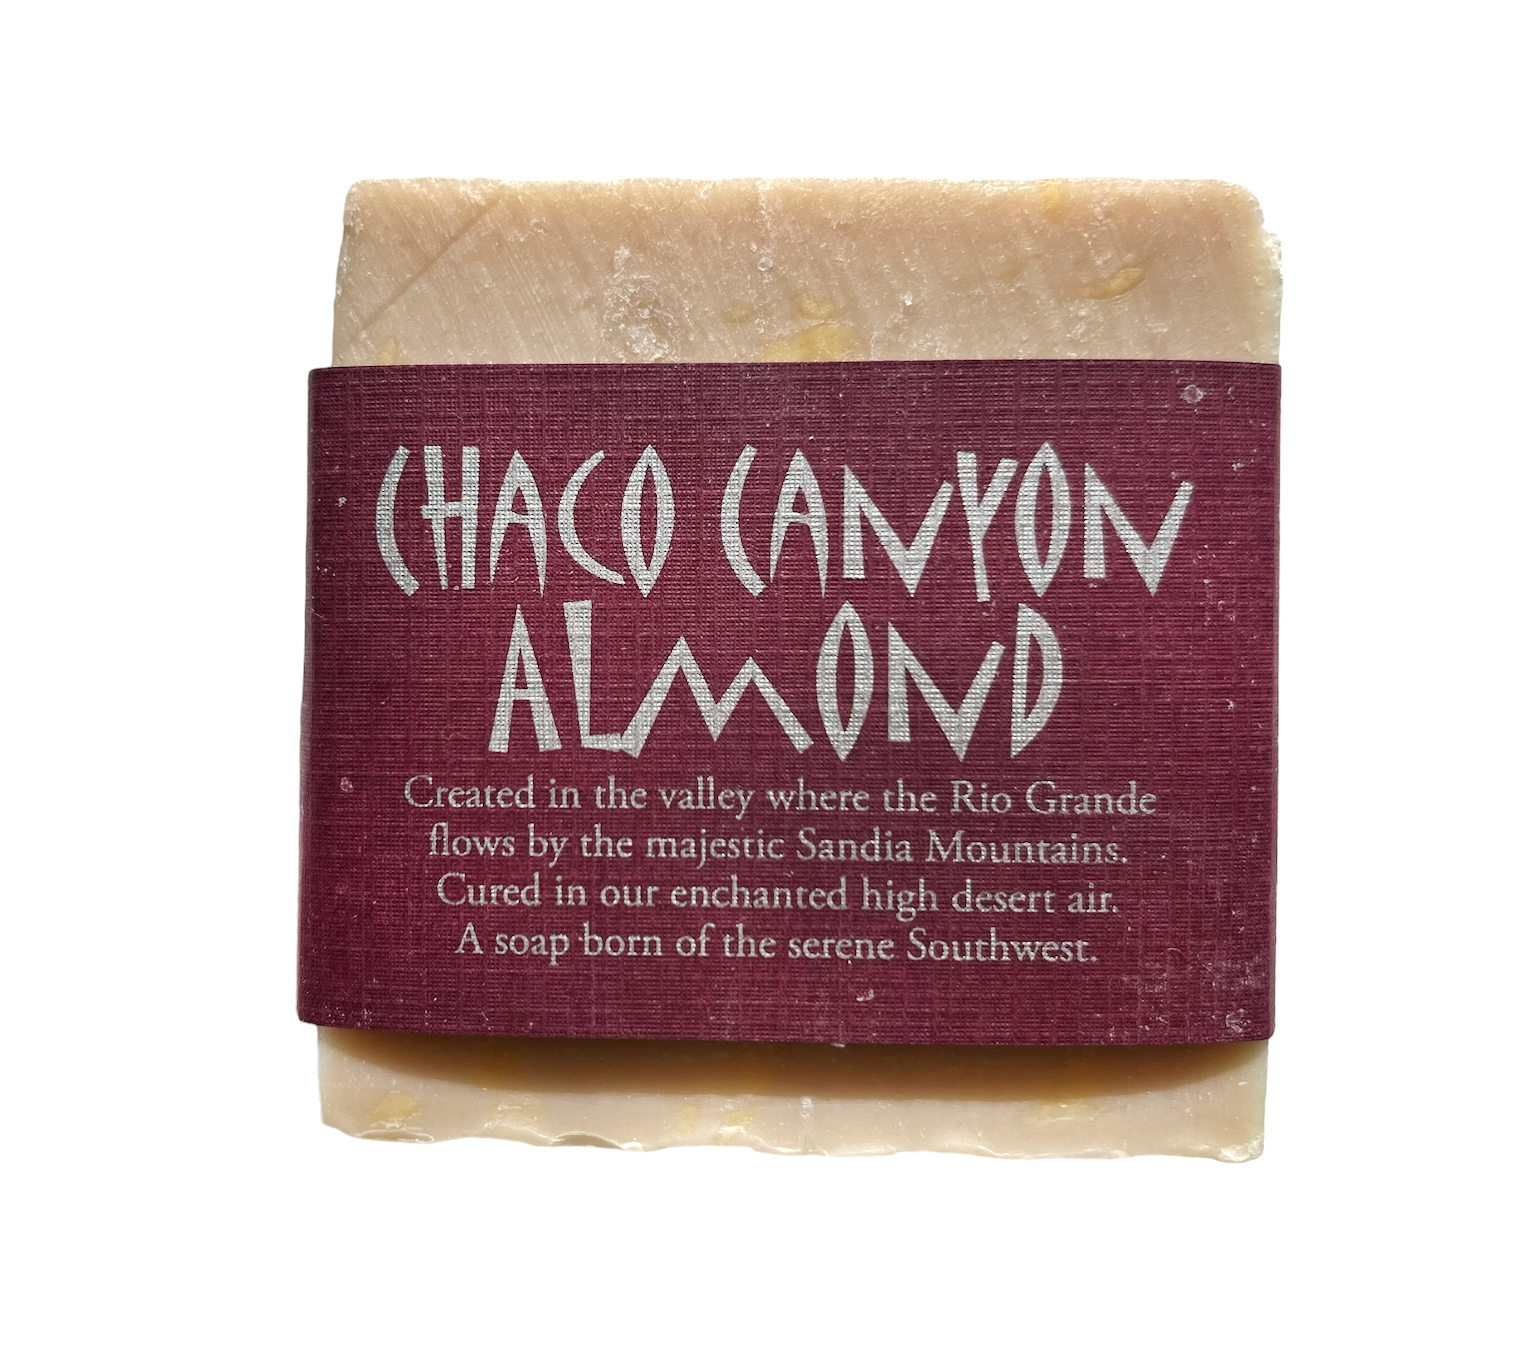 Chaco Canyon Almond soap by Sandia Soap Company